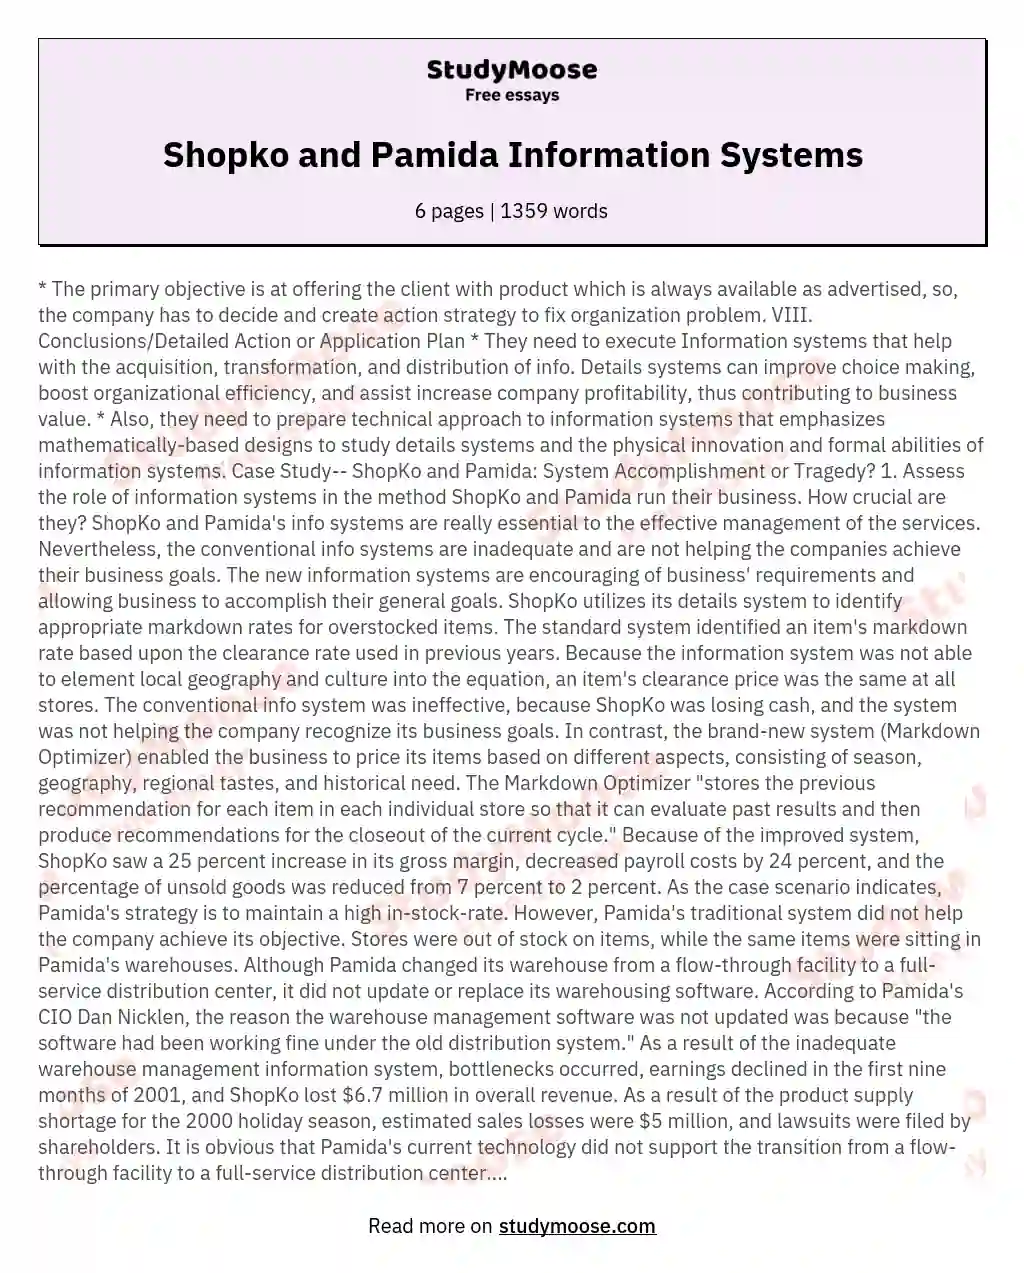 Shopko and Pamida Information Systems essay